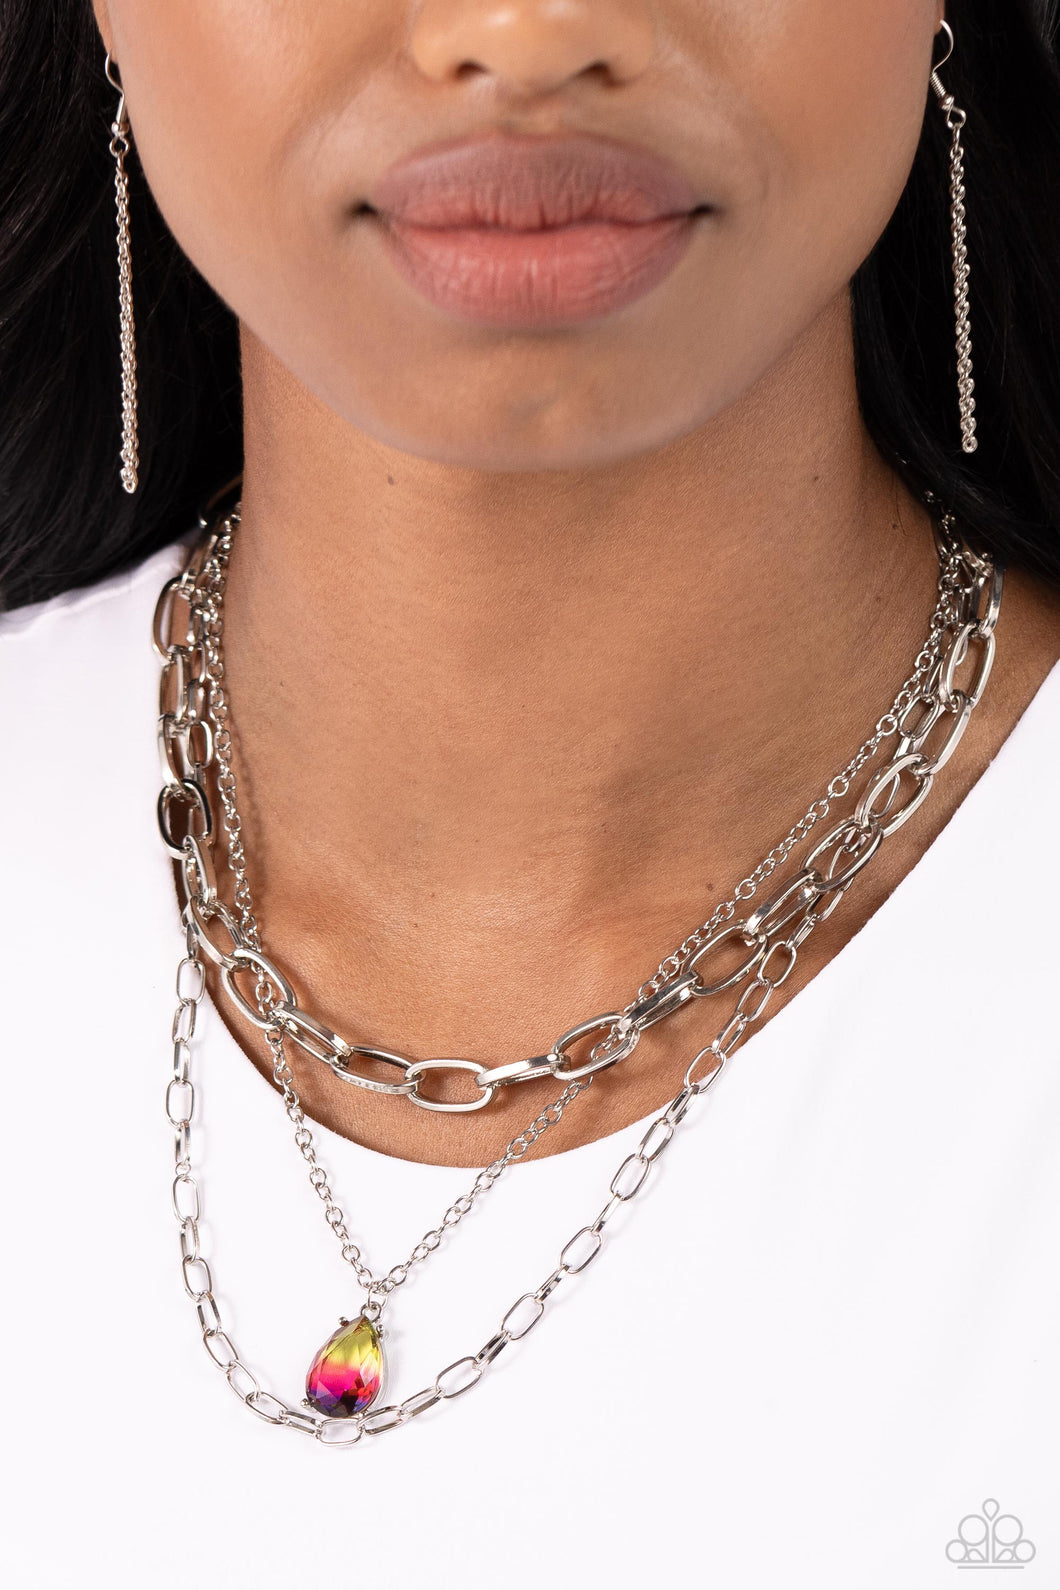 Teardrop Tiers - Multicolored Silver Necklace- PaparazzI Accessories